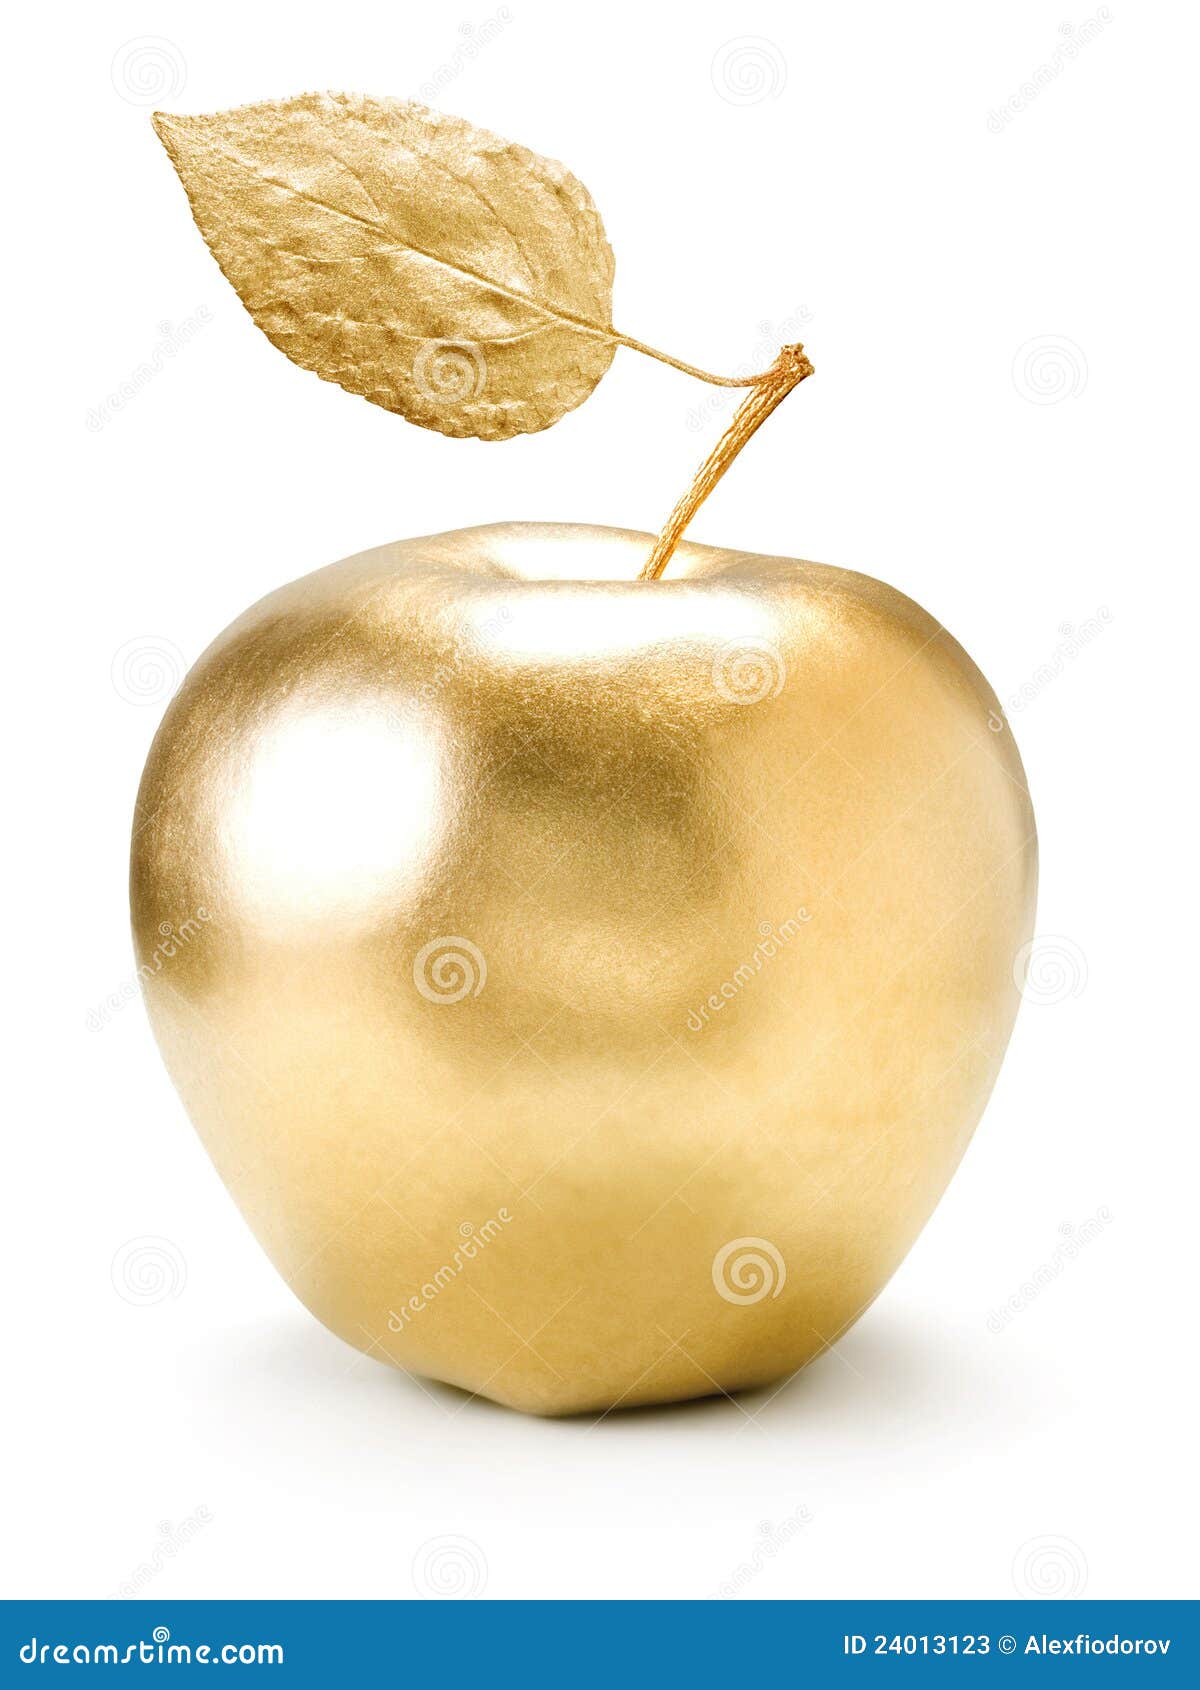 clip art golden apple - photo #45